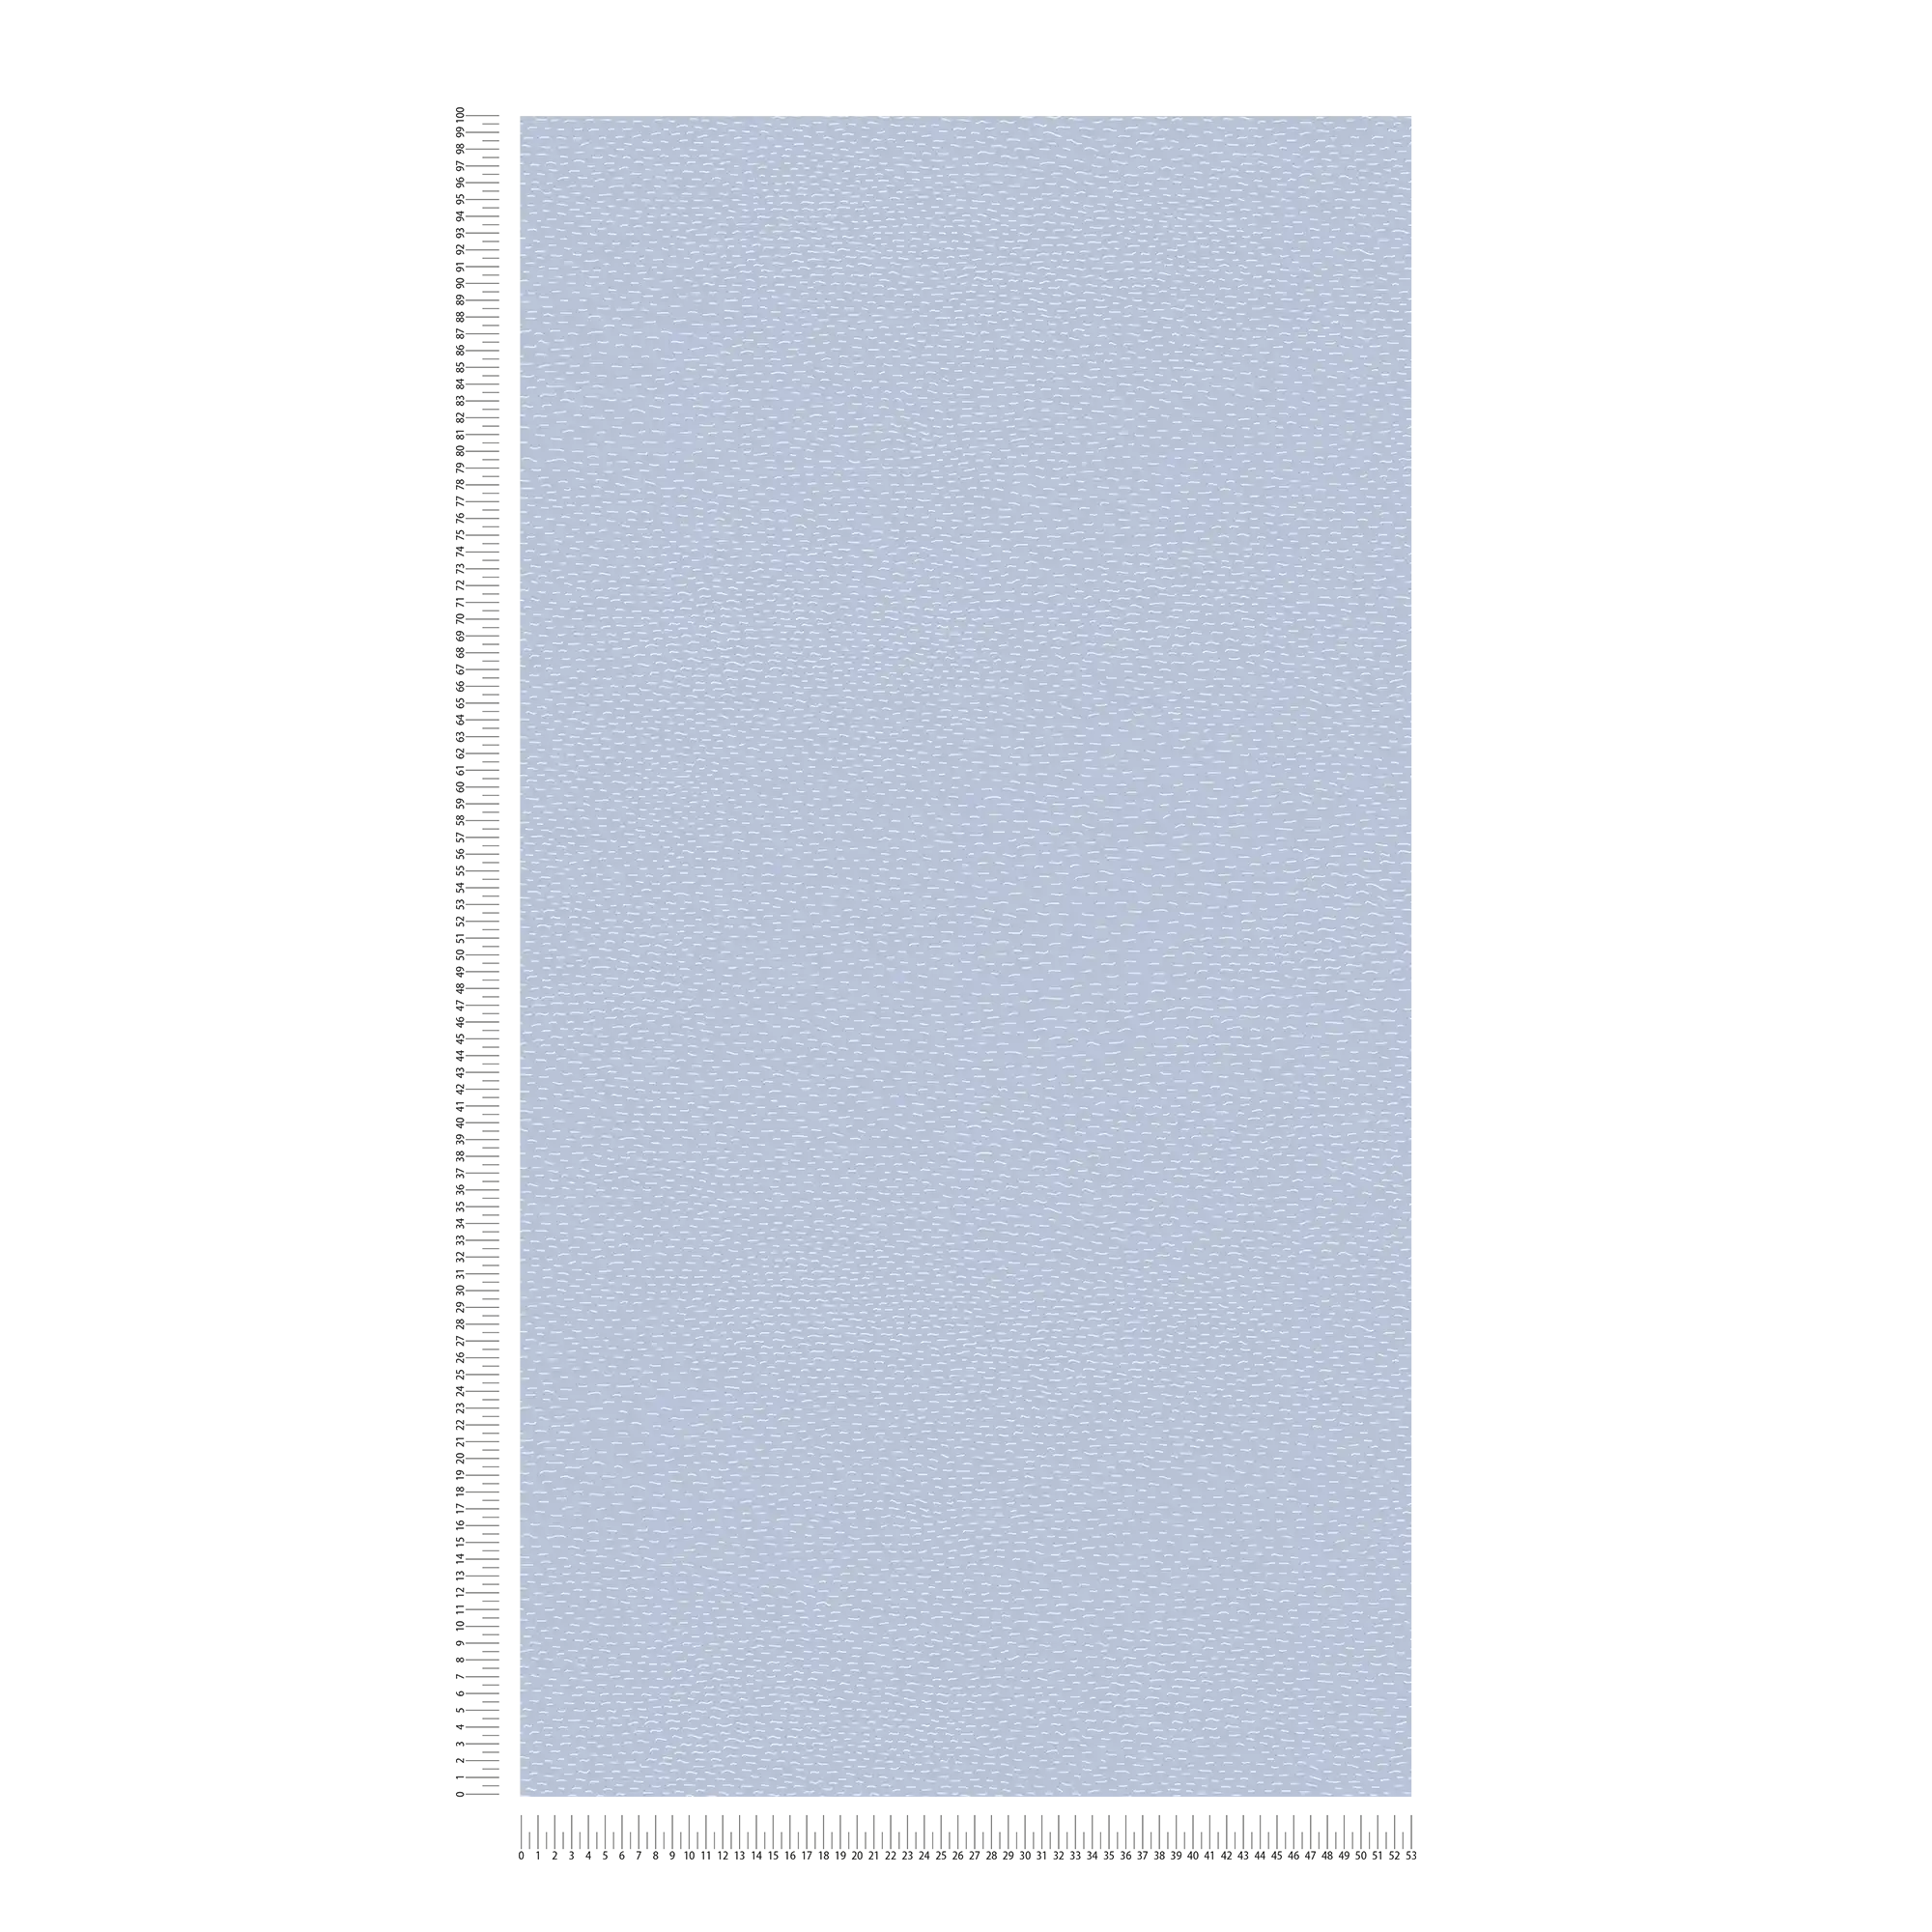             Nursery wallpaper horizontal lines - blue, grey, white
        